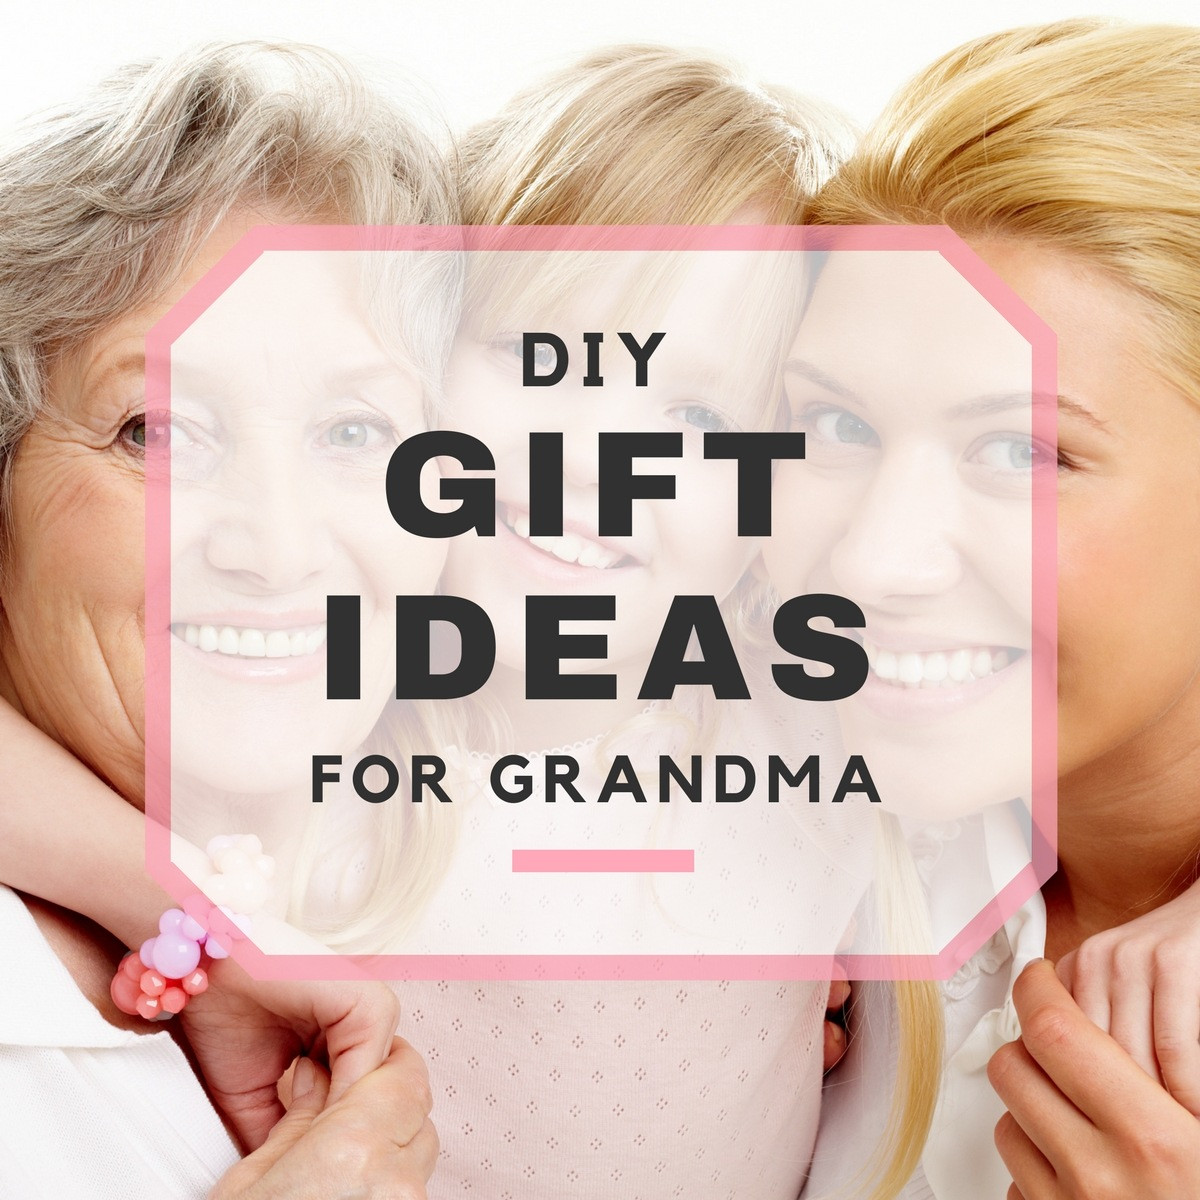 DIY Grandma Birthday Gifts
 DIY Gift Ideas for Grandma